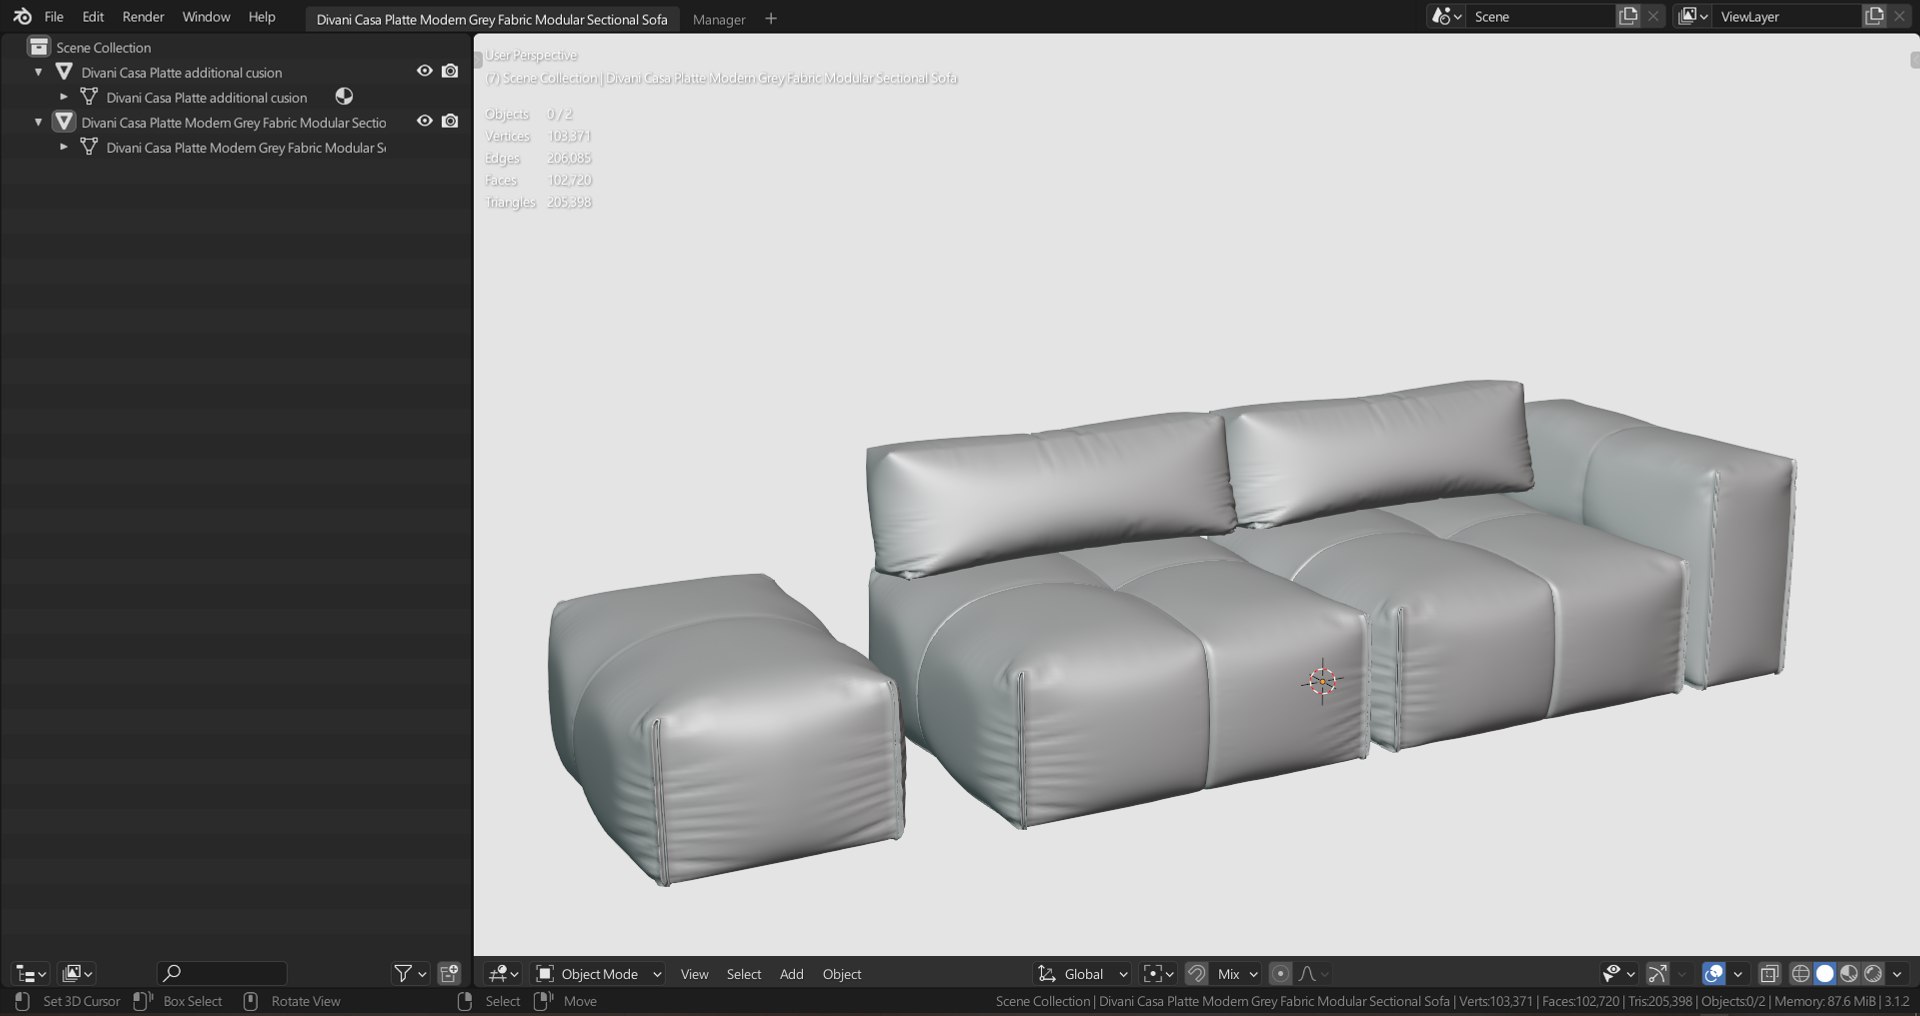 3D Divani Casa Platte Modern Grey Fabric Modular Sectional Sofa Model ...